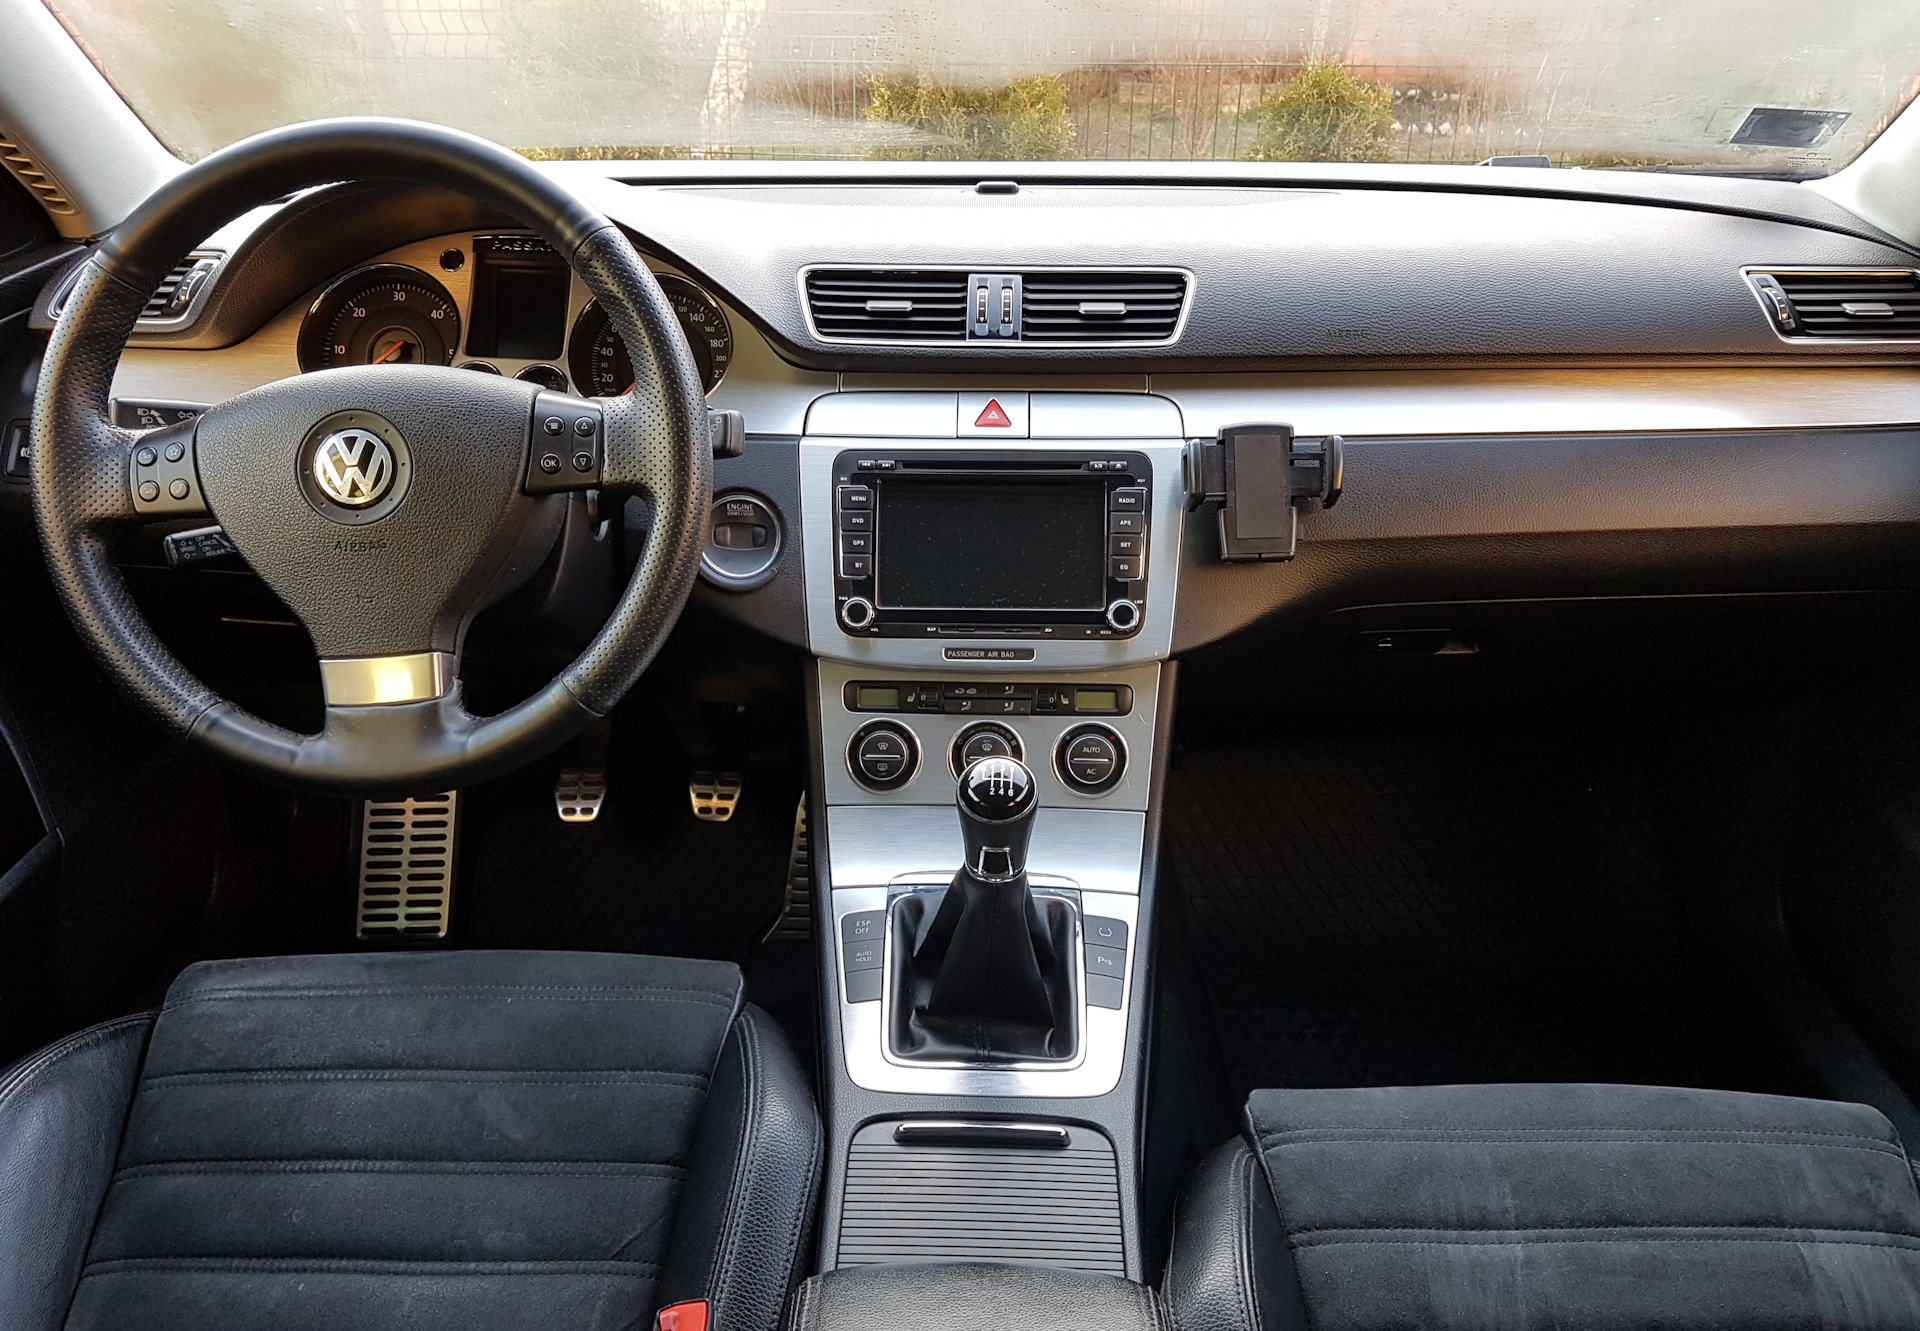 Включи б6. VW Passat b6 салон. Фольксваген Пассат б6 2008 салон. WV Passat b6 салон. Volkswagen Passat b6 Interior.